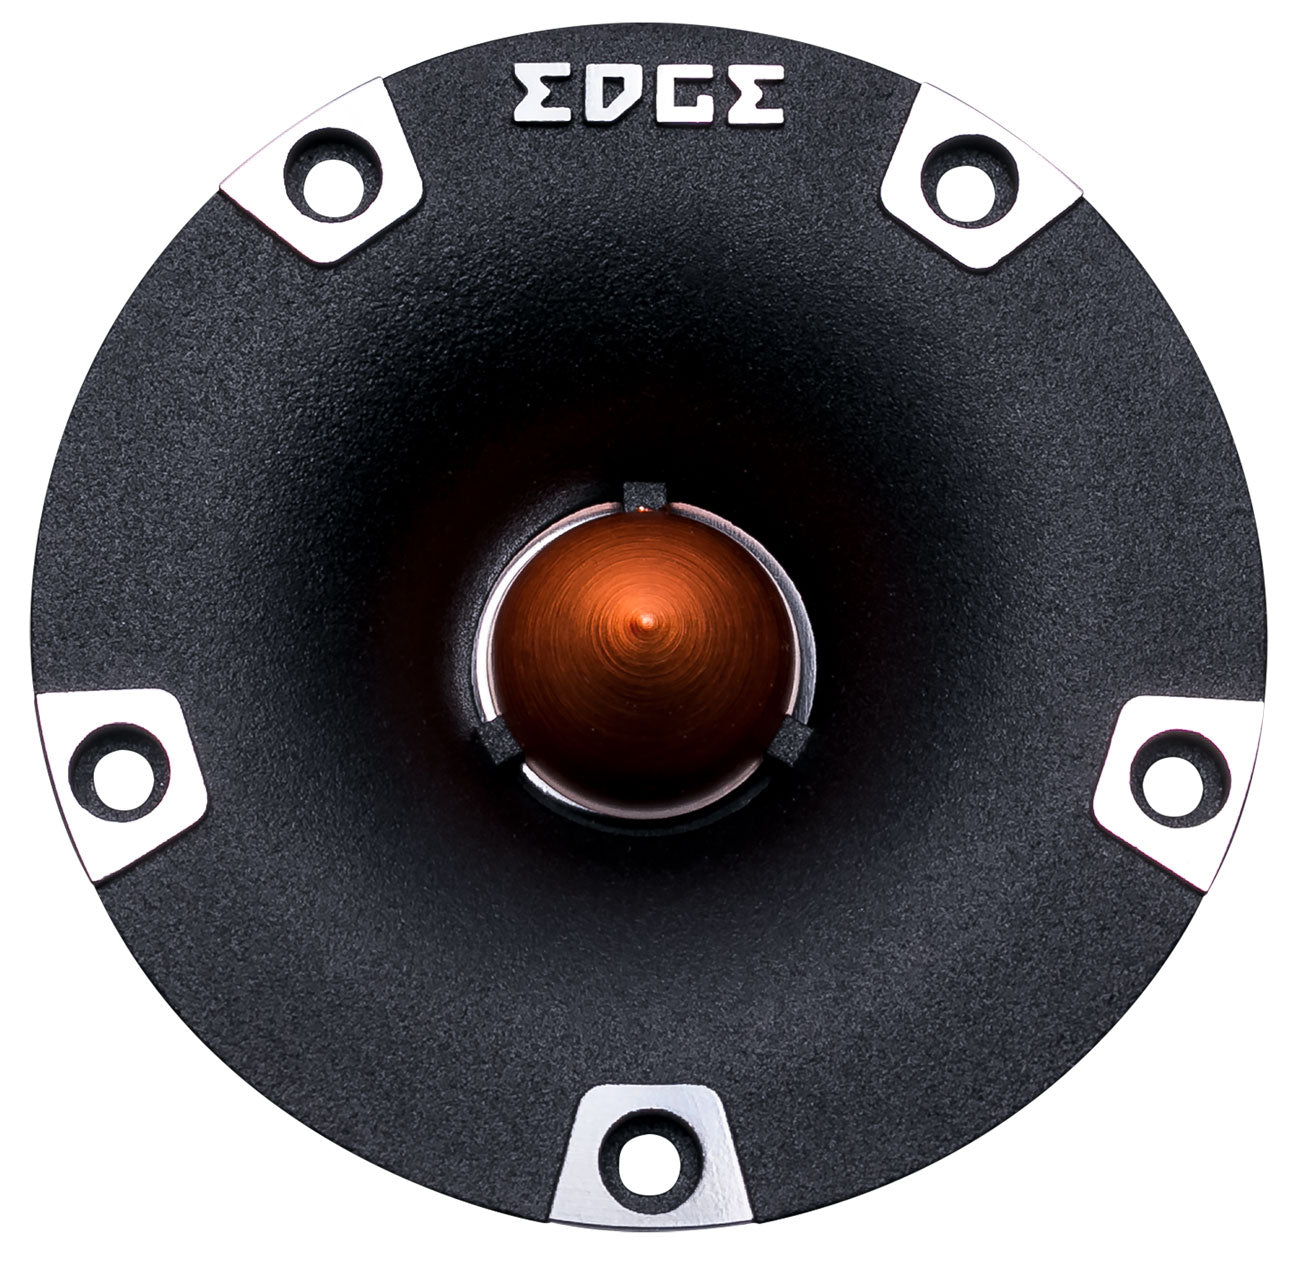 EDBXPRO38T-E0 | EDGE DBX Series 3.7 inch 150 watts Pro Audio Tweeters - Pair